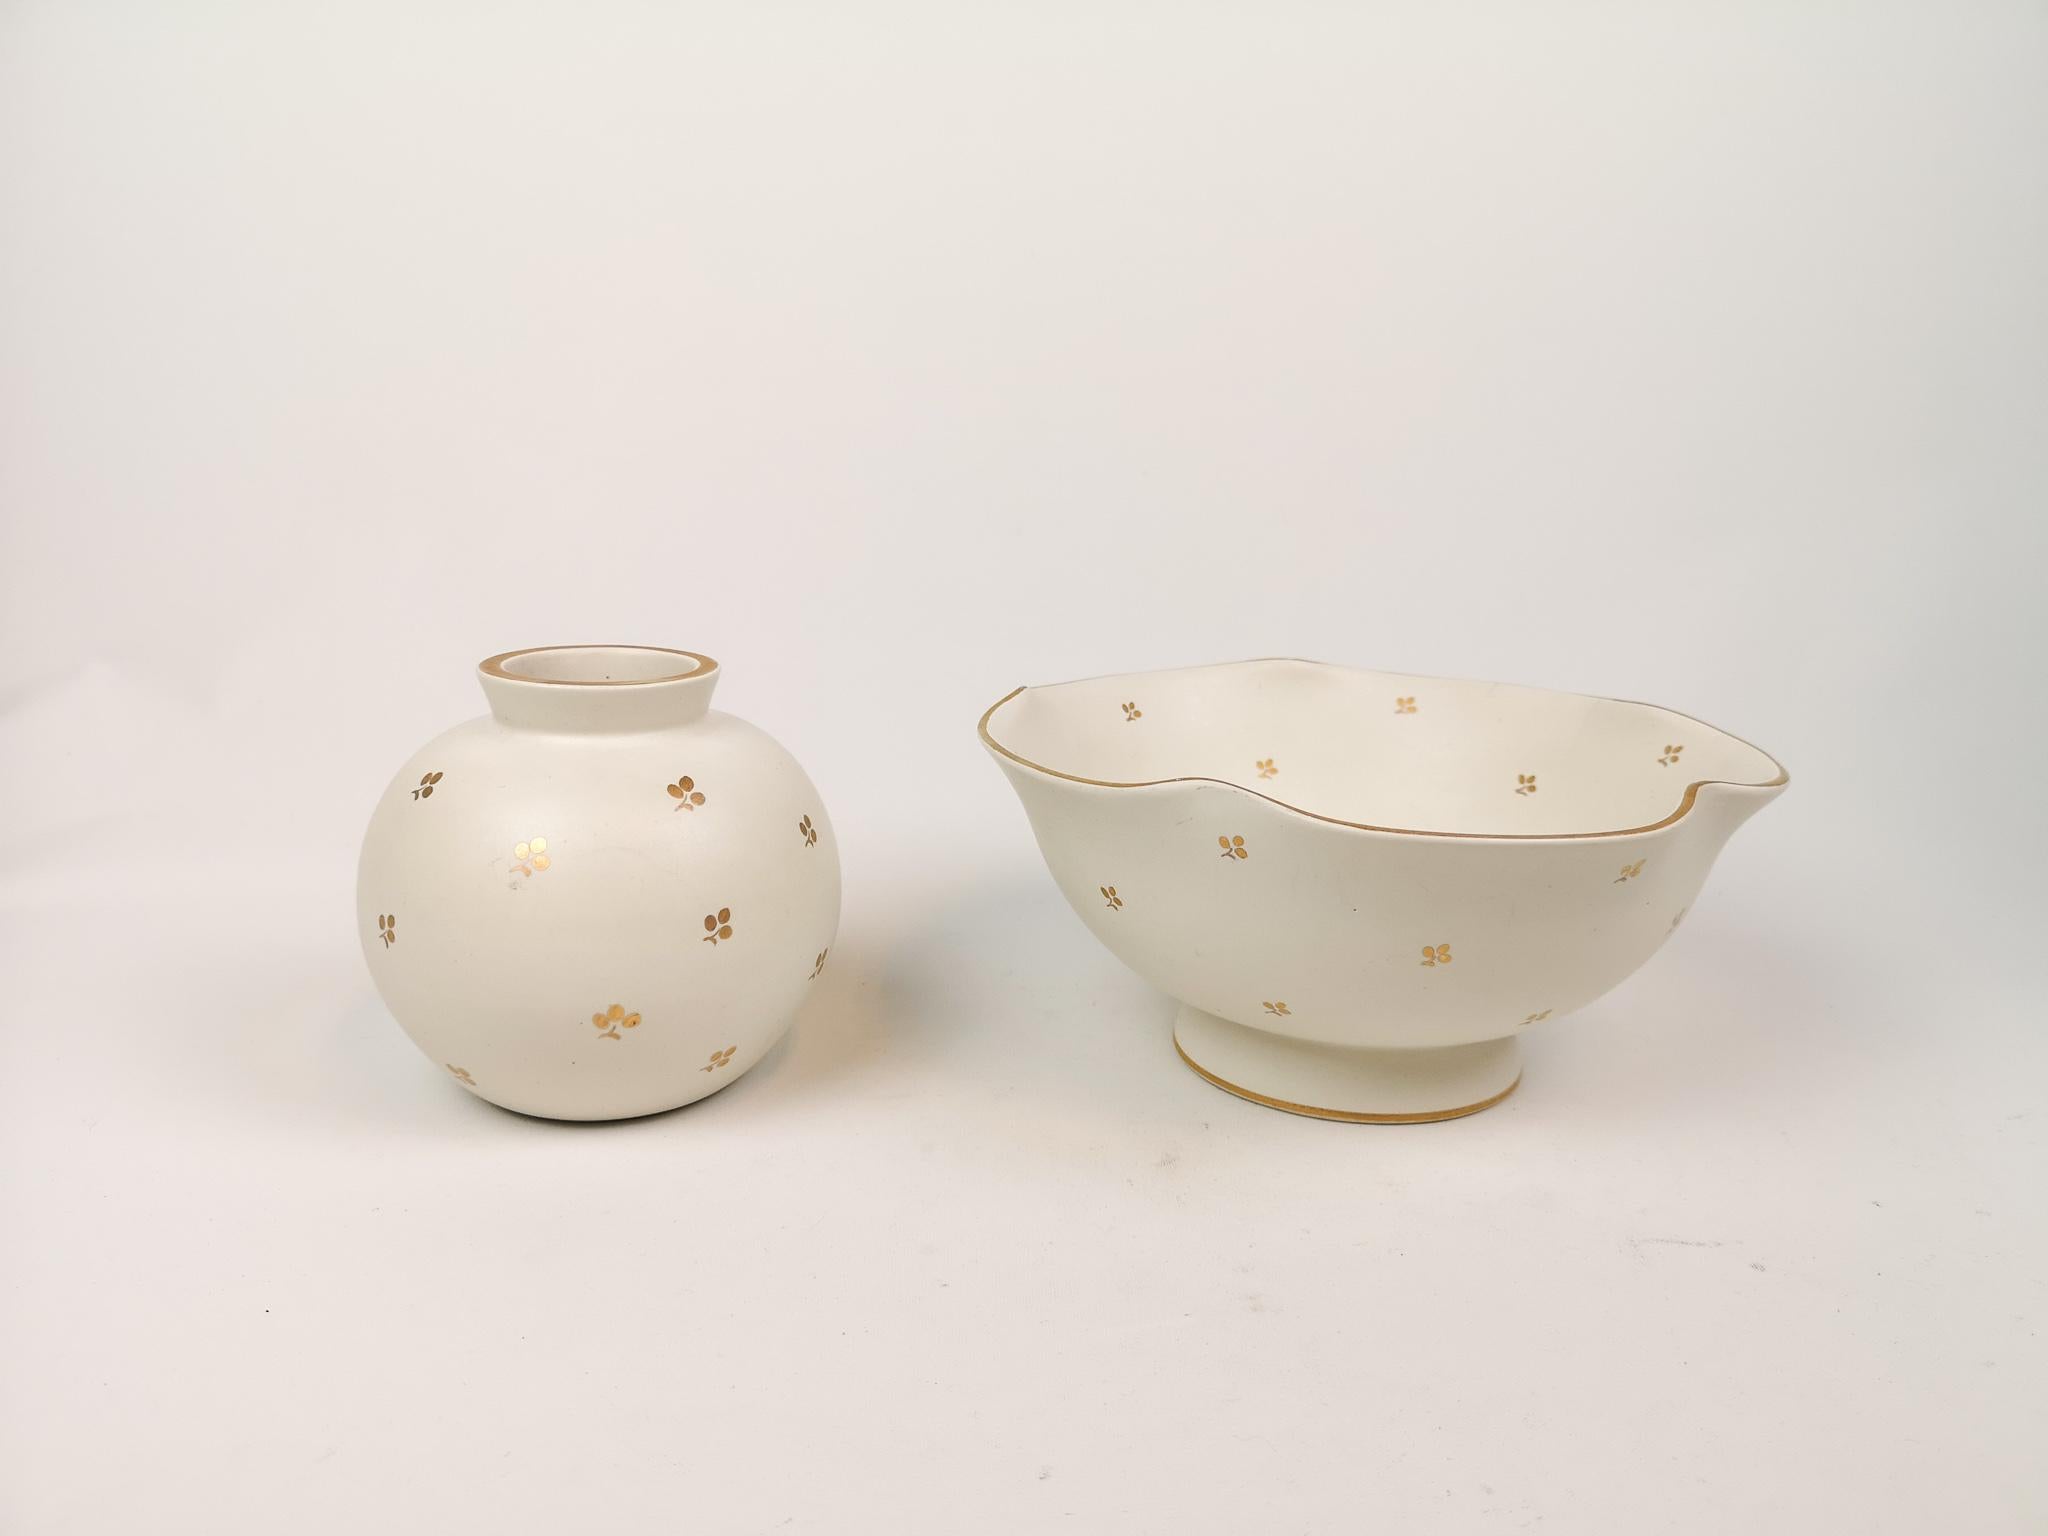 Midcentury Wilhelm Kåge ceramic vase and bowl for Gustavsberg. The model is called 